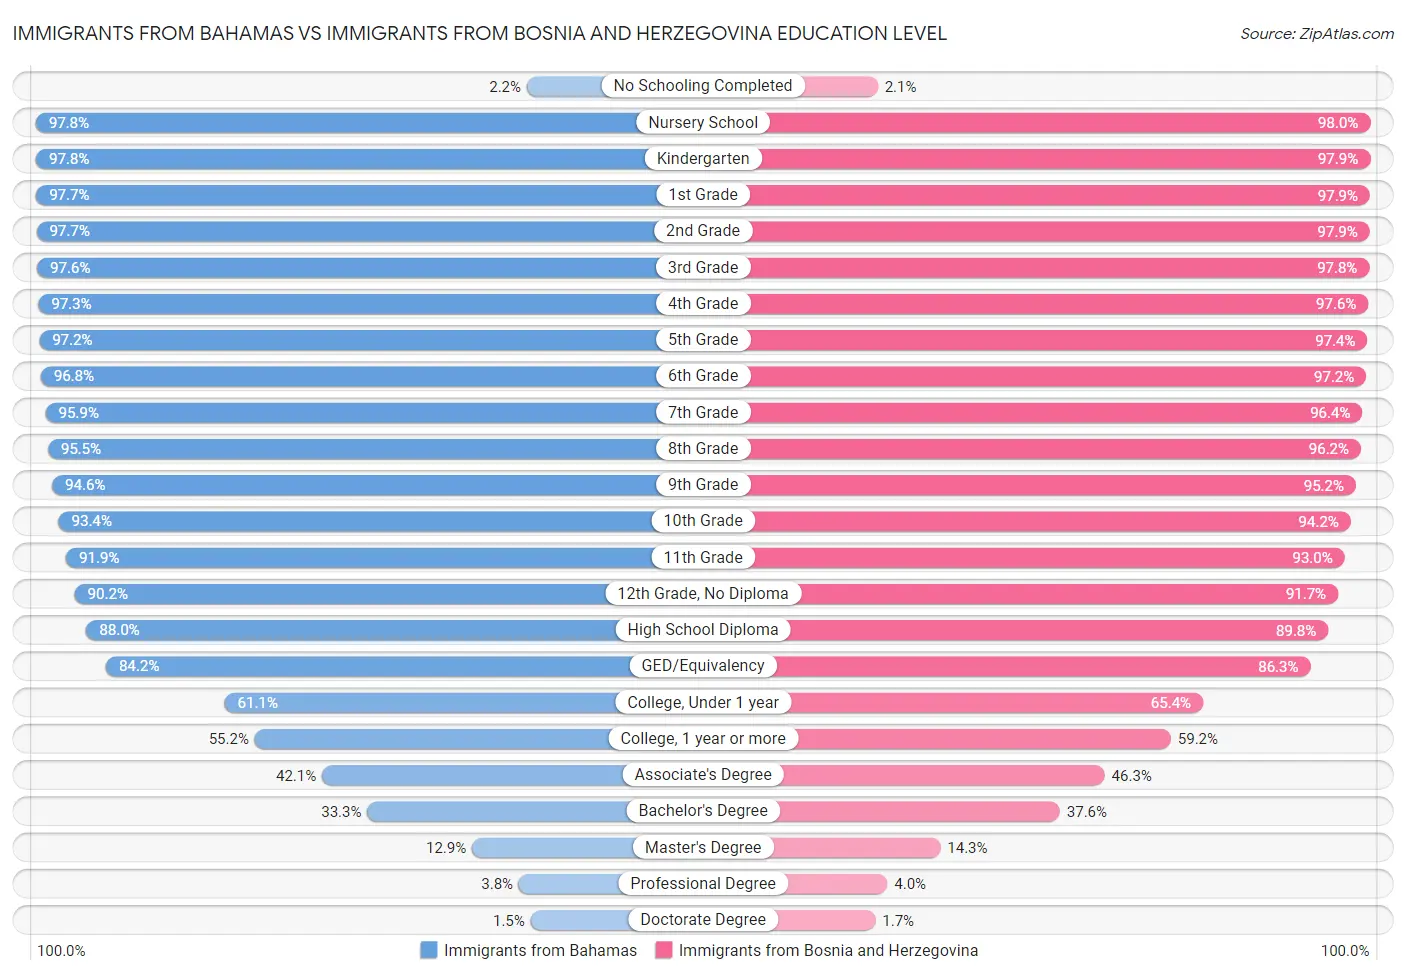 Immigrants from Bahamas vs Immigrants from Bosnia and Herzegovina Education Level